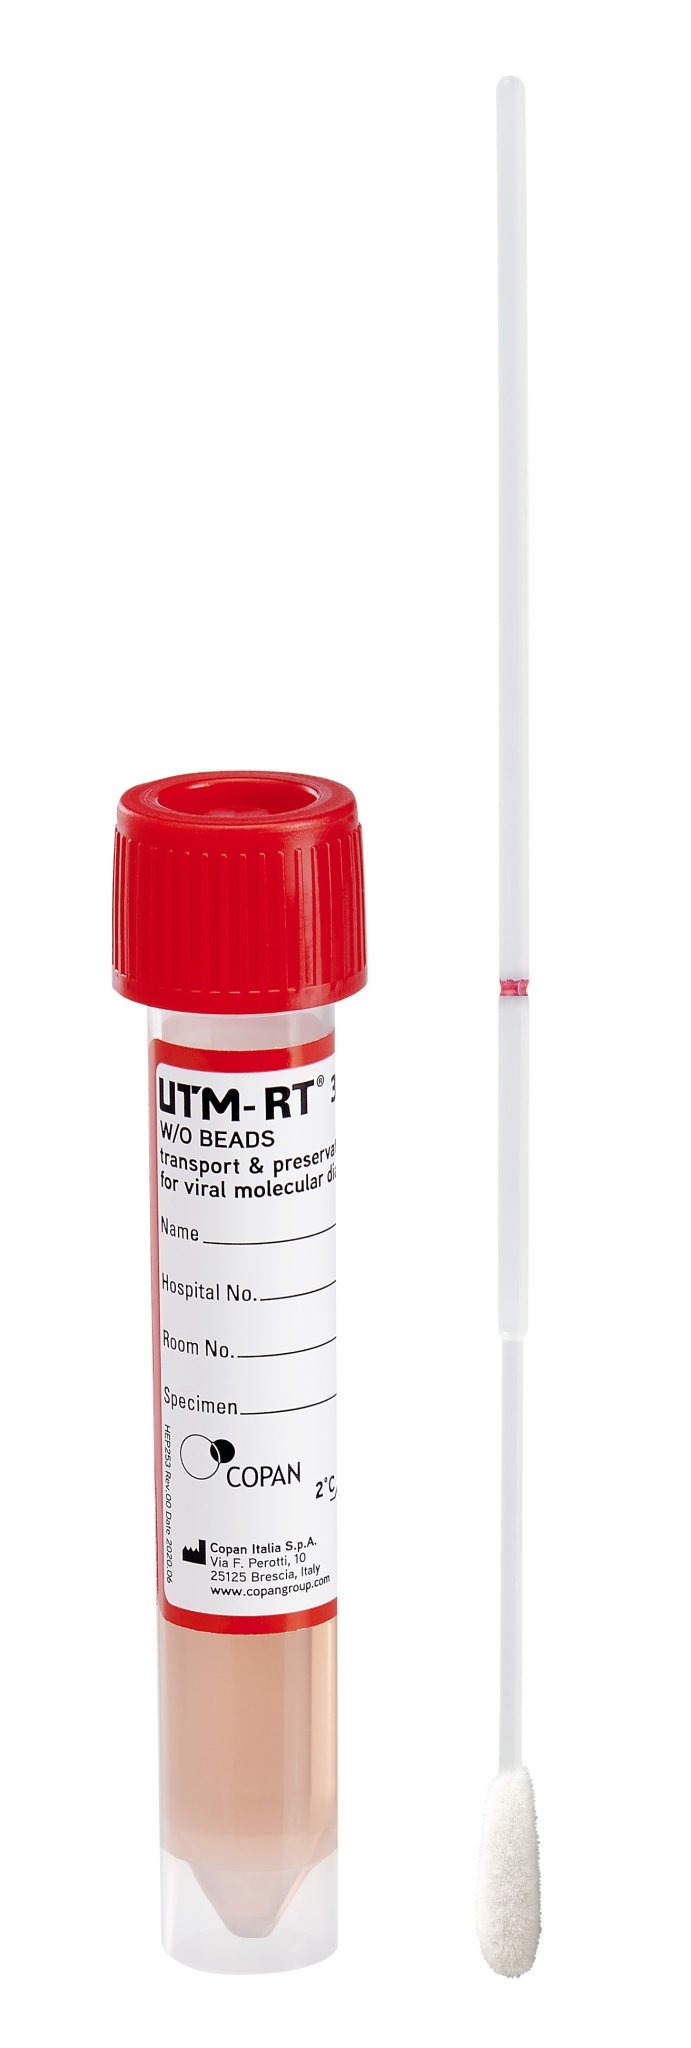 UTM® 3C064N - Single Regular Specimen Collection Kit - COPAN Diagnostics, Inc.